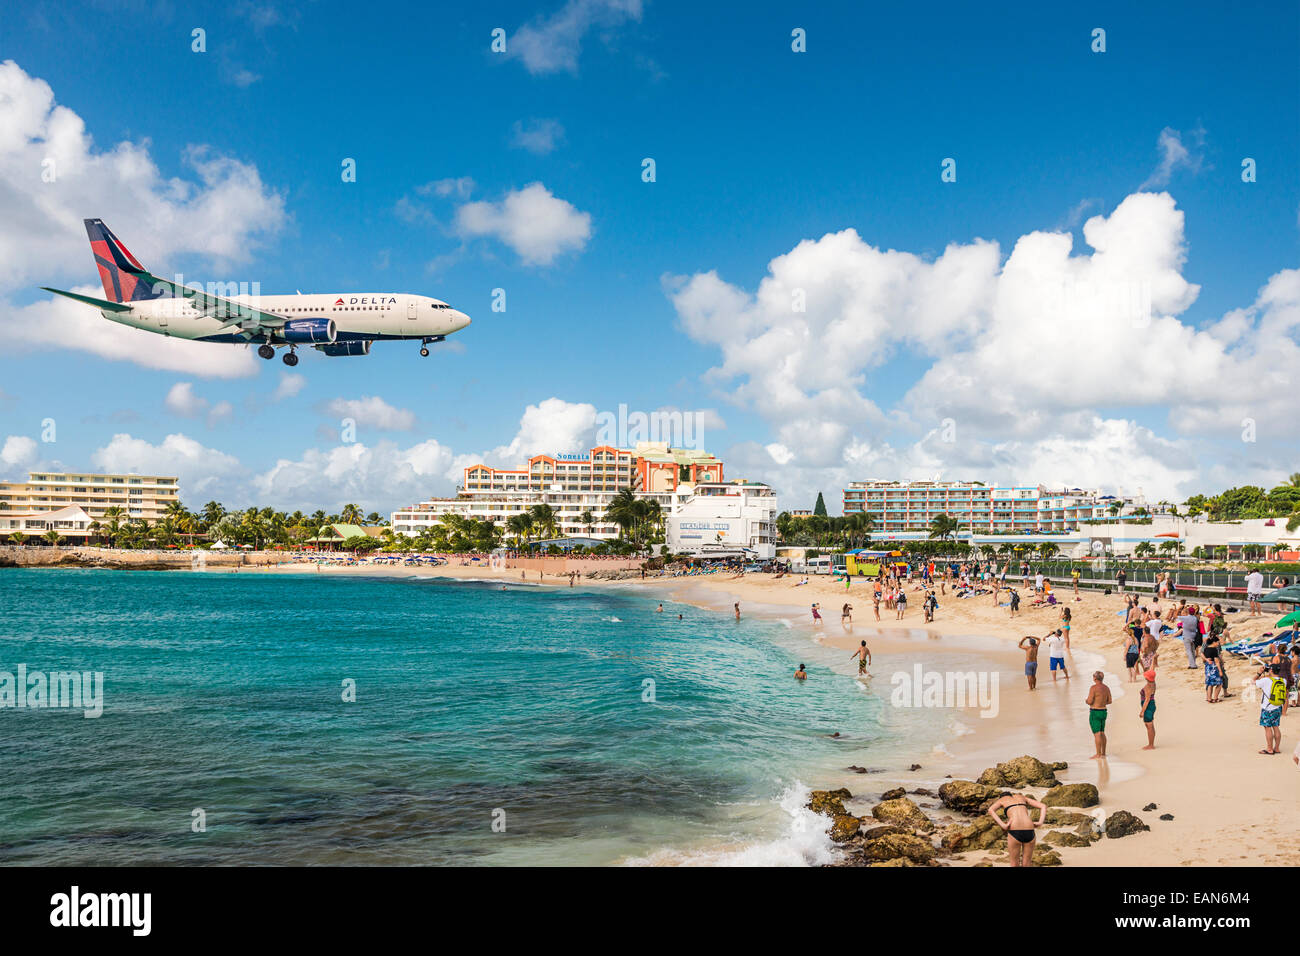 A jet approaches Princess Juliana Airport above onlookers on Maho Beach on Sint Maarten. Stock Photo